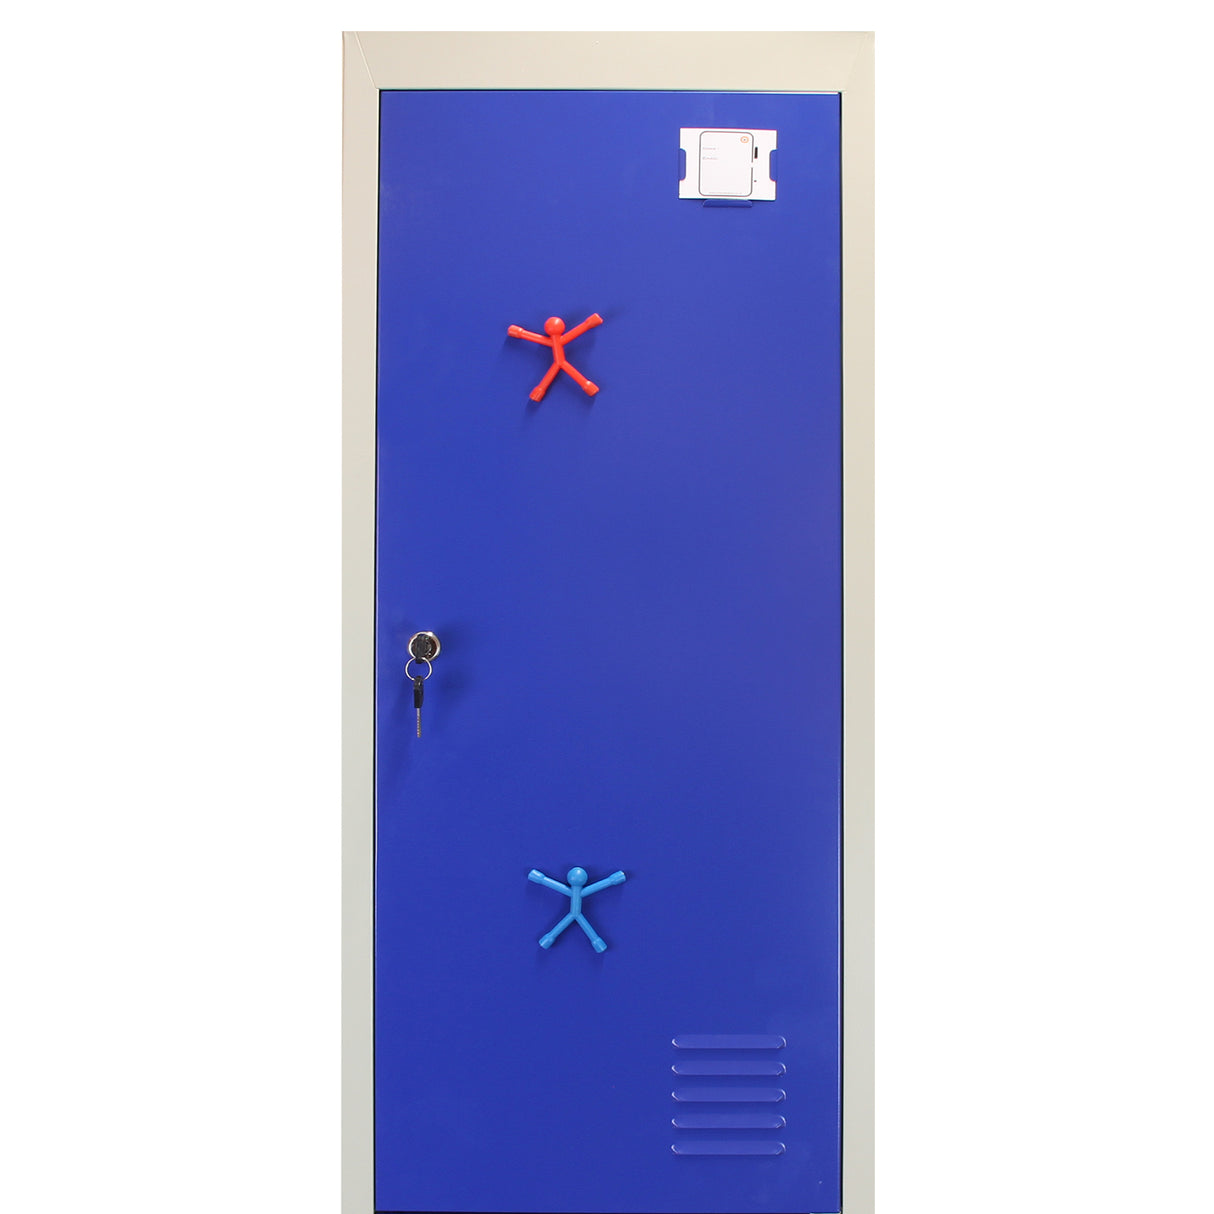 3 x casiers de rangement en métal - Deux portes, bleu - A plat